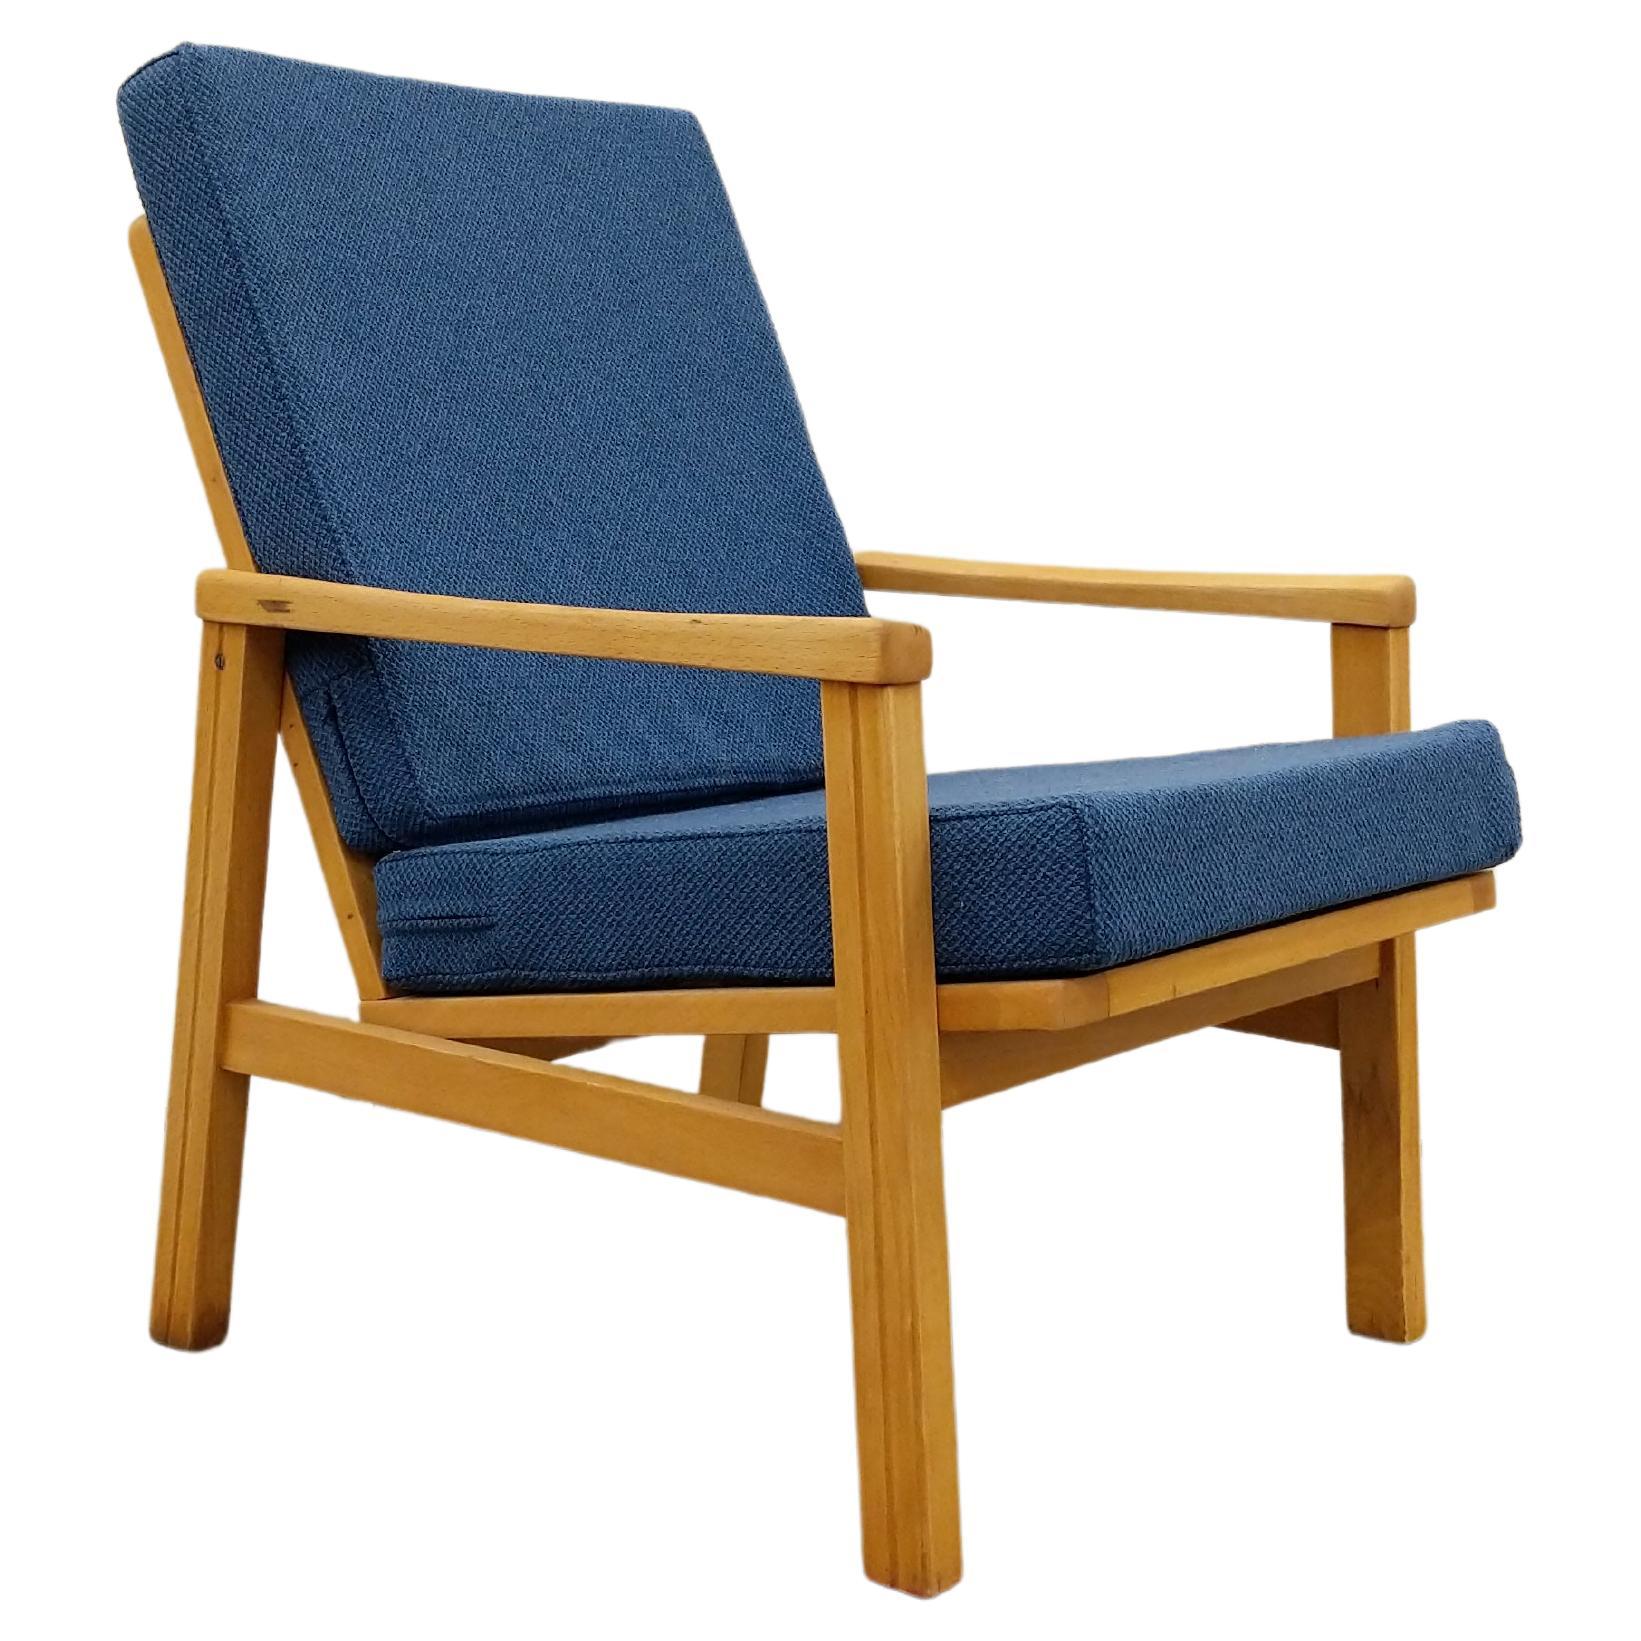 Vintage Czech Mid Century Modern Lounge Chair